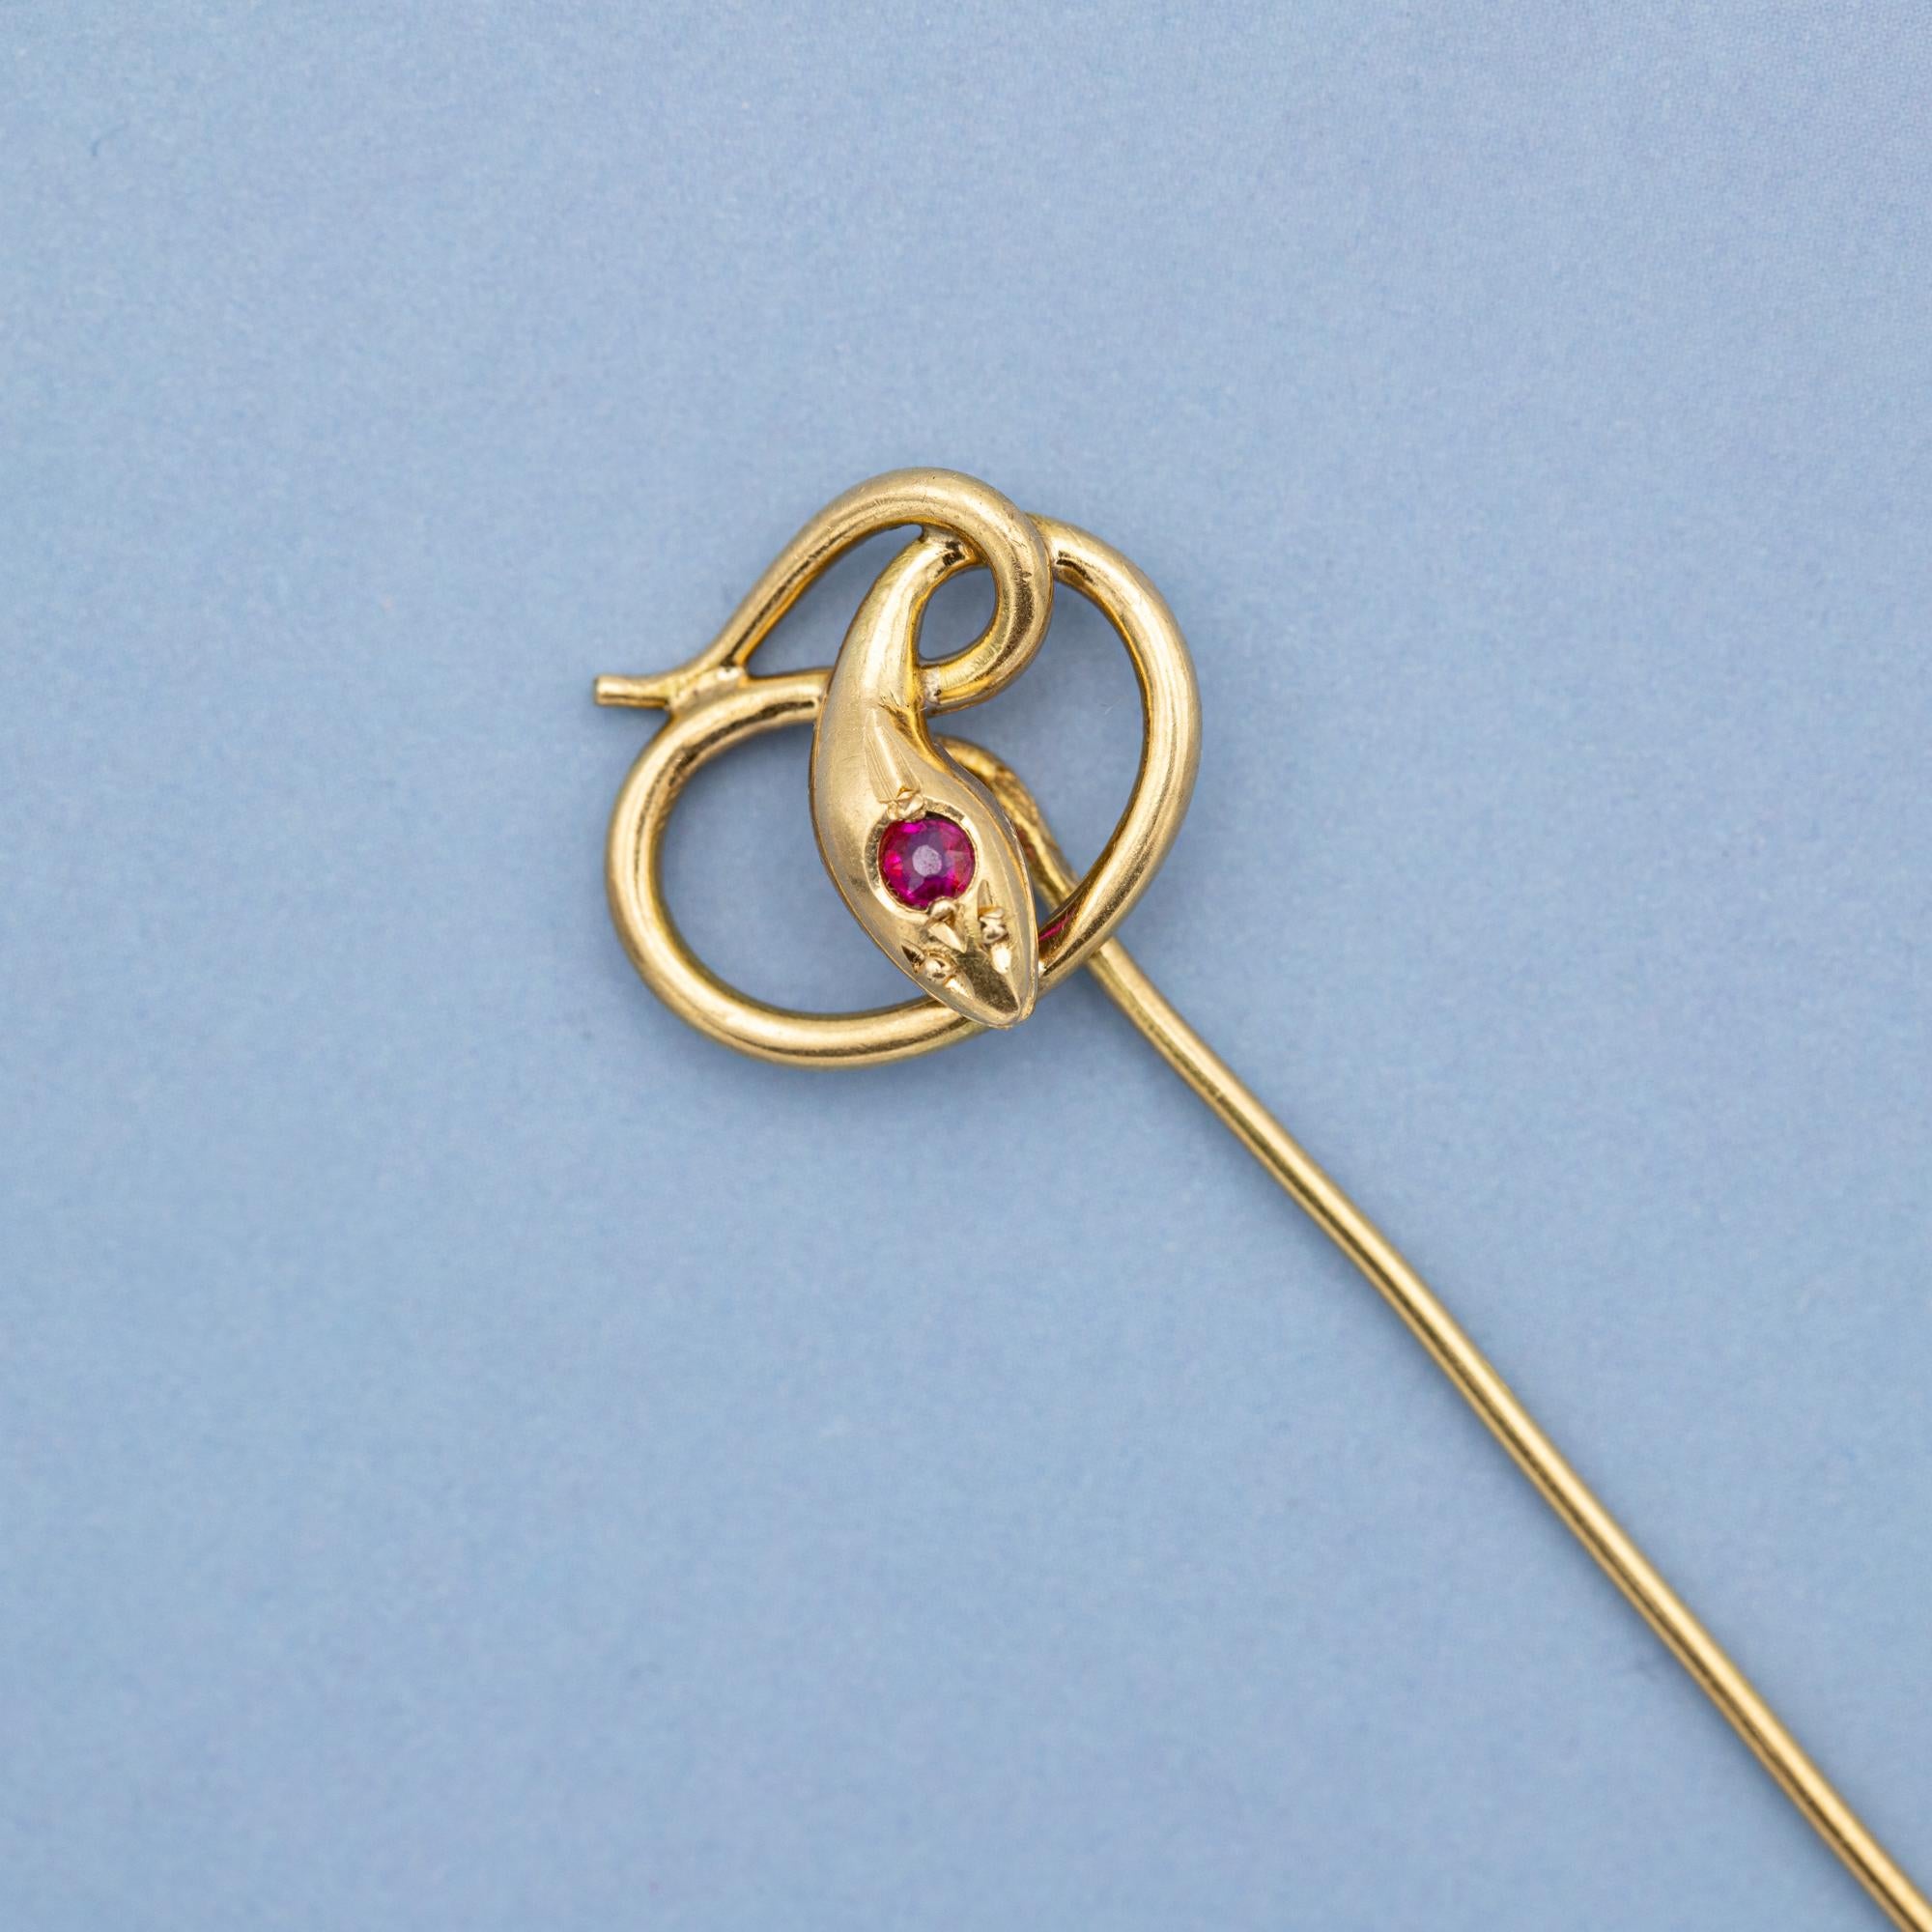 18k Yellow gold stick pin - Snake brooch - Antique French serpentine cravat pin 1